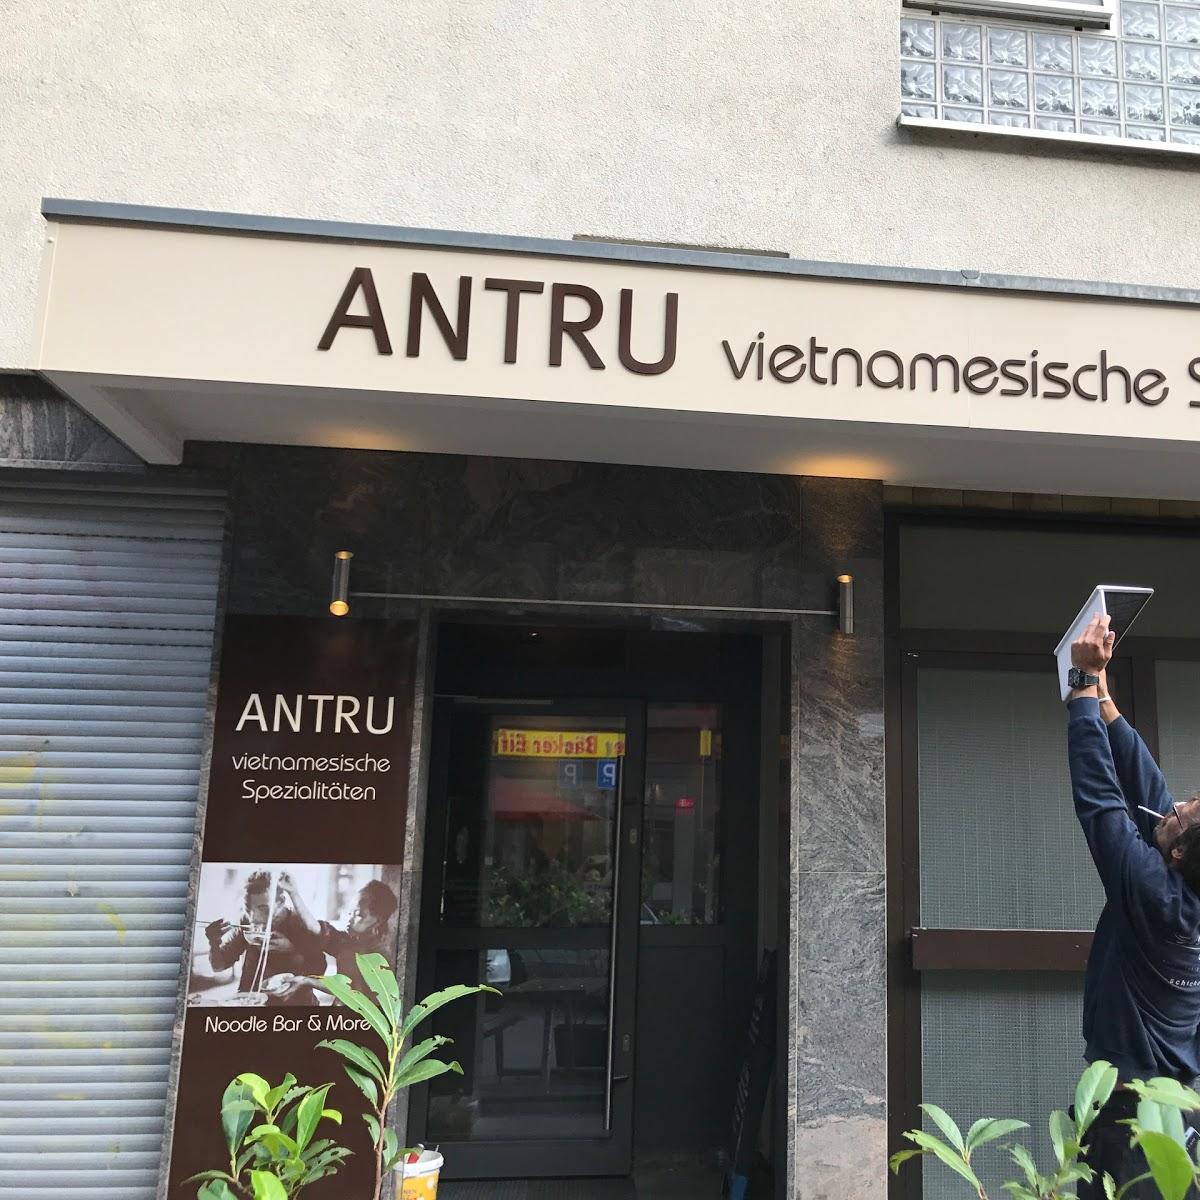 Restaurant "Antru Noodle Bar & More - Vietnam Restaurant" in Frankfurt am Main